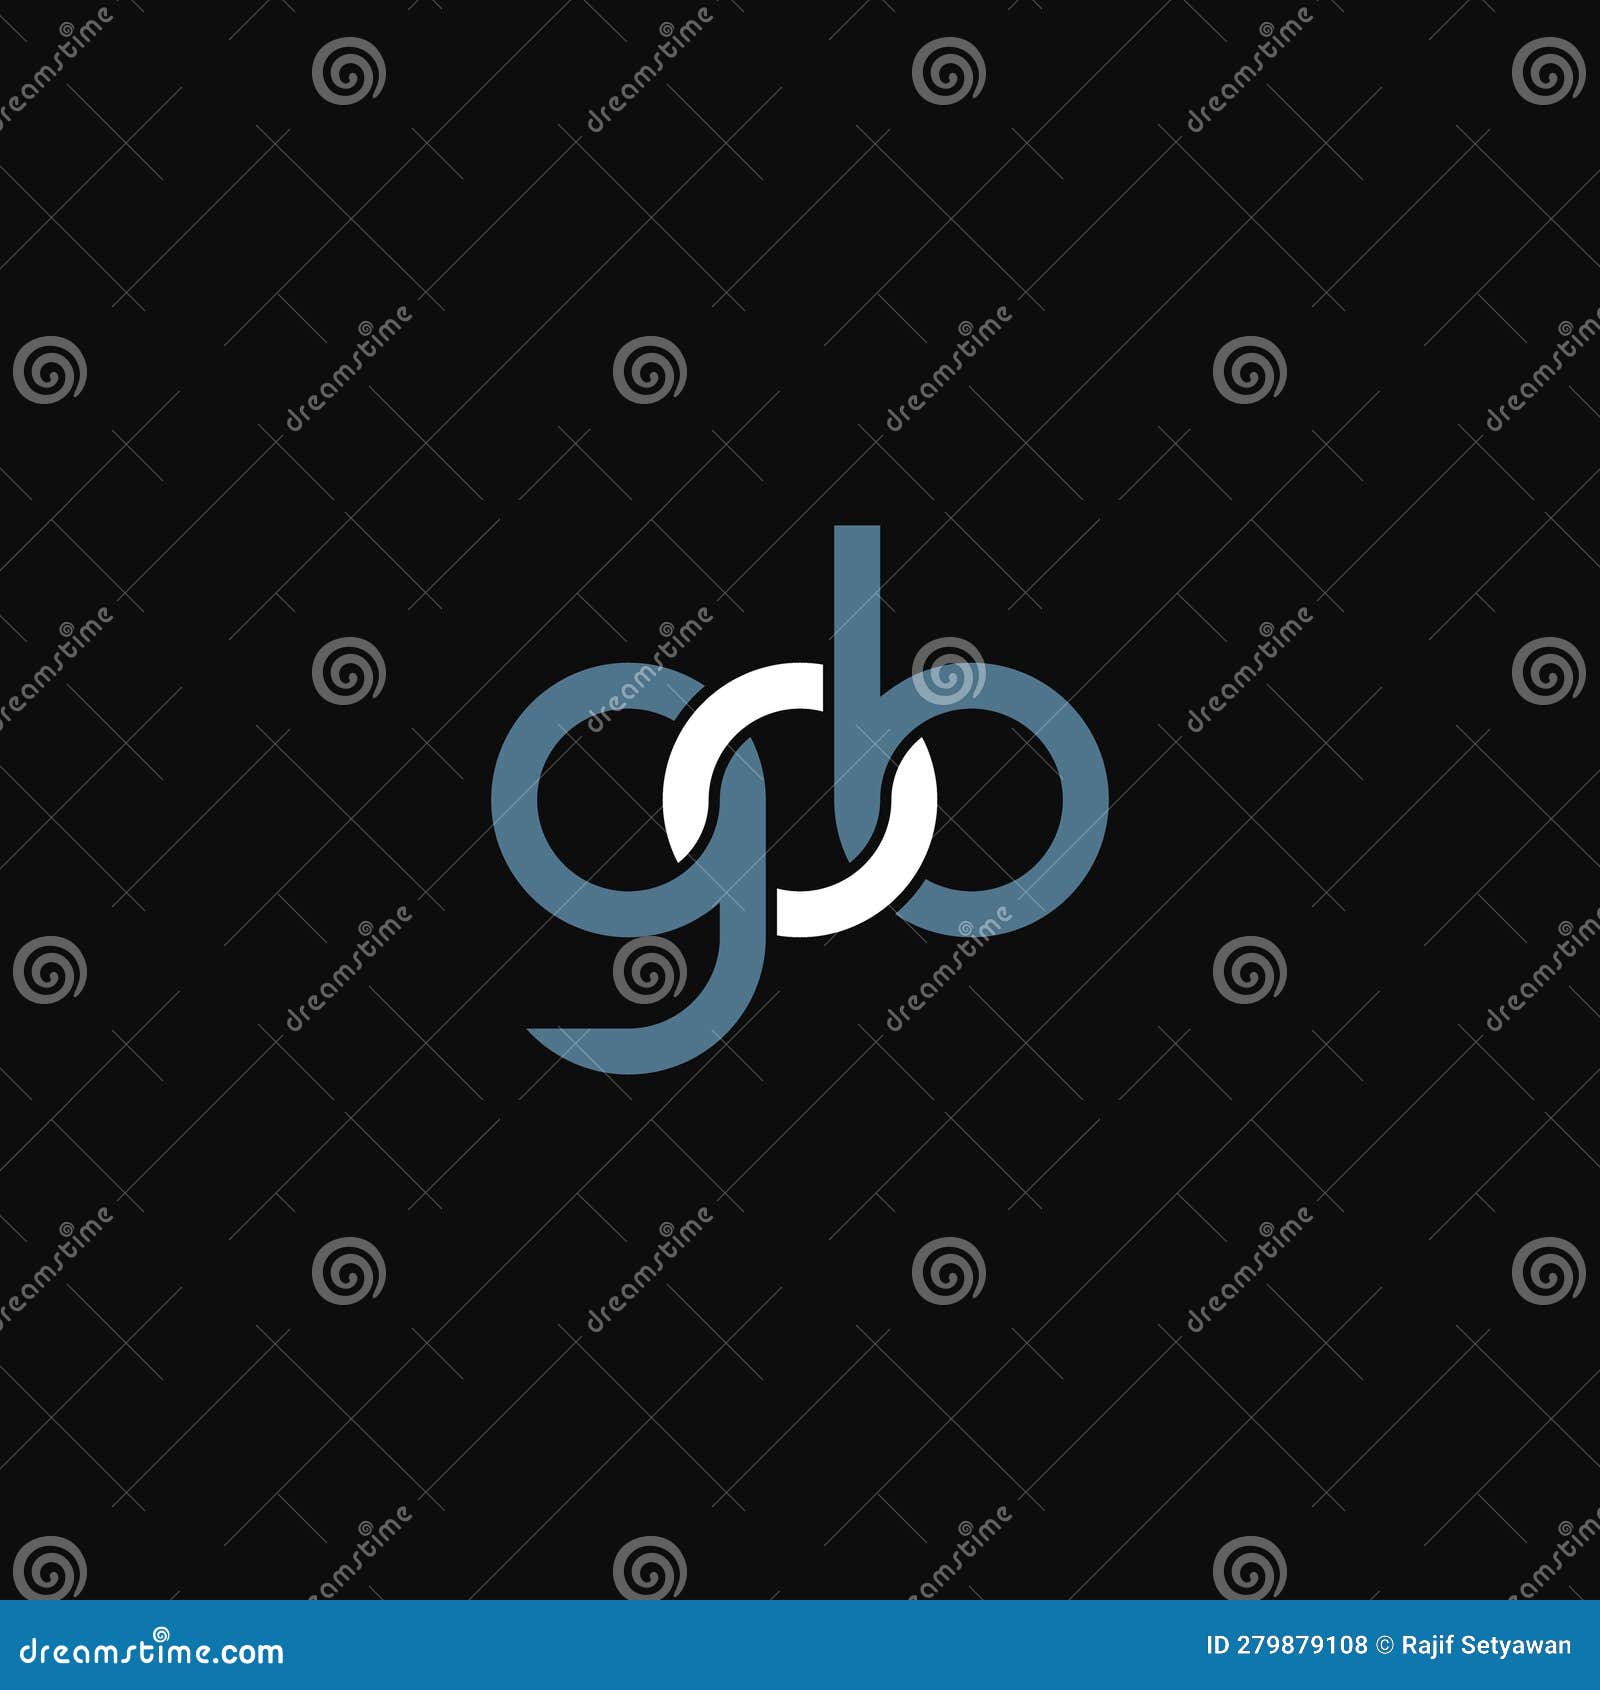 linked letters gob monogram logo 